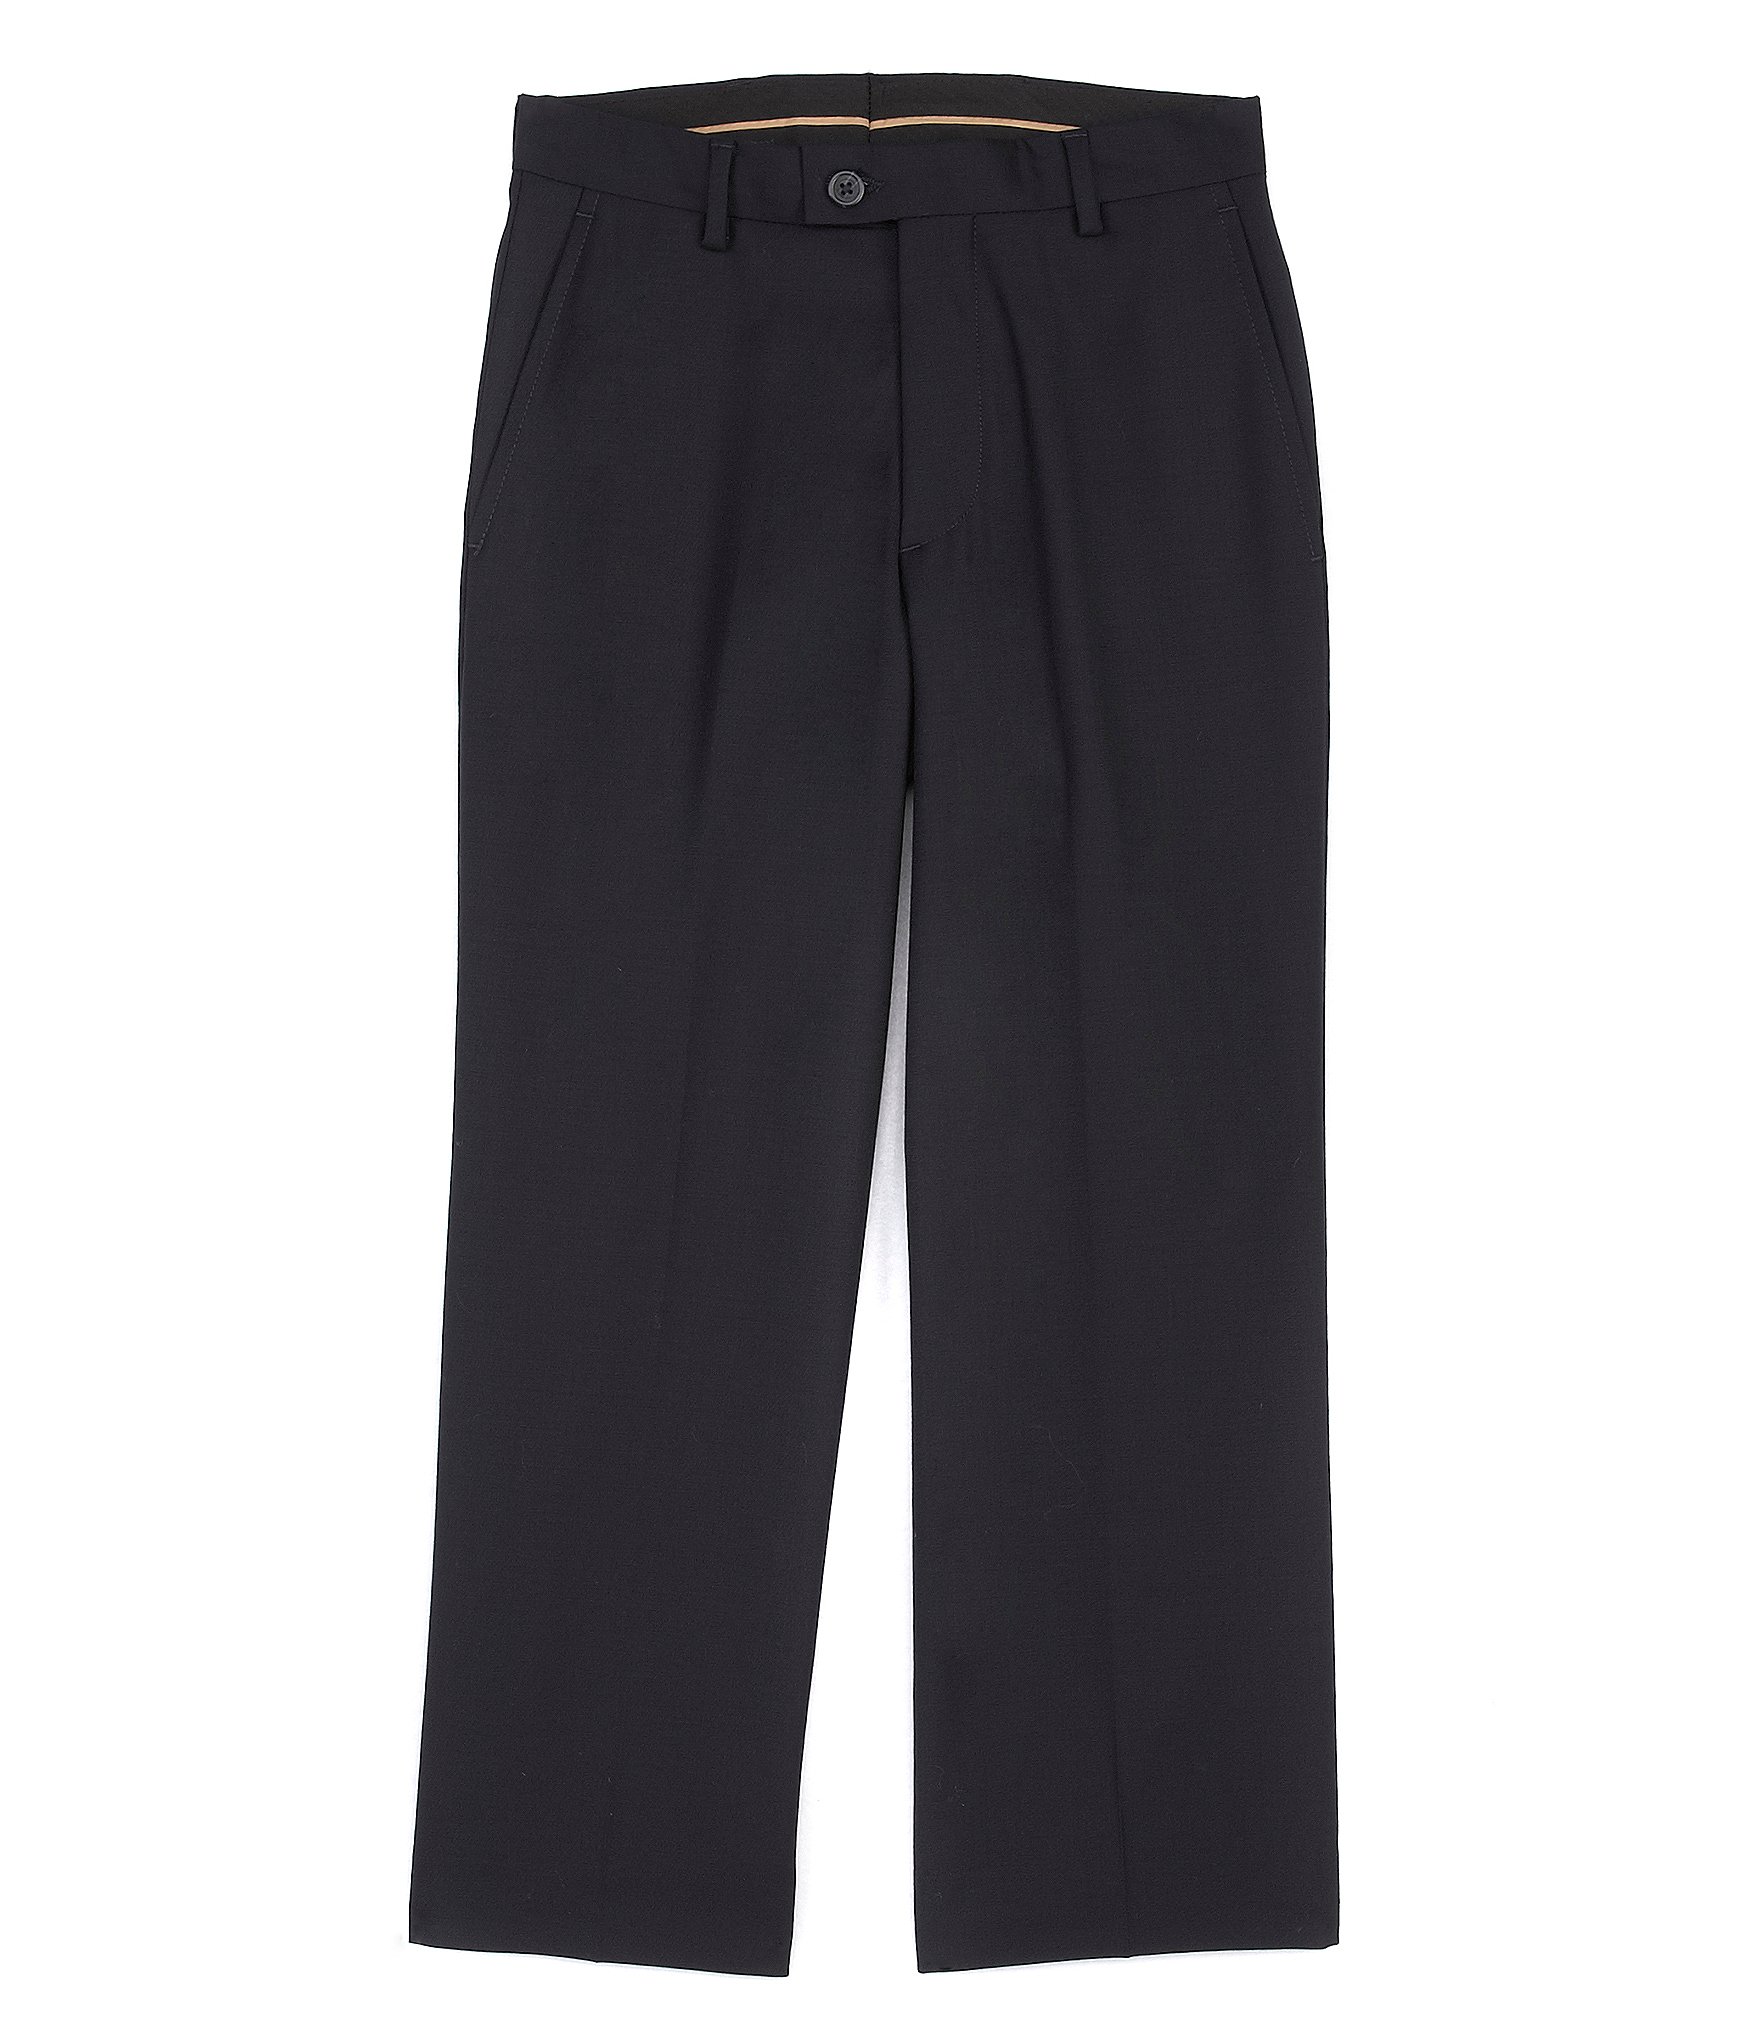 Boys Navy Dress Pants Flat Front Slacks with Black Belt sizes 4 to 20 